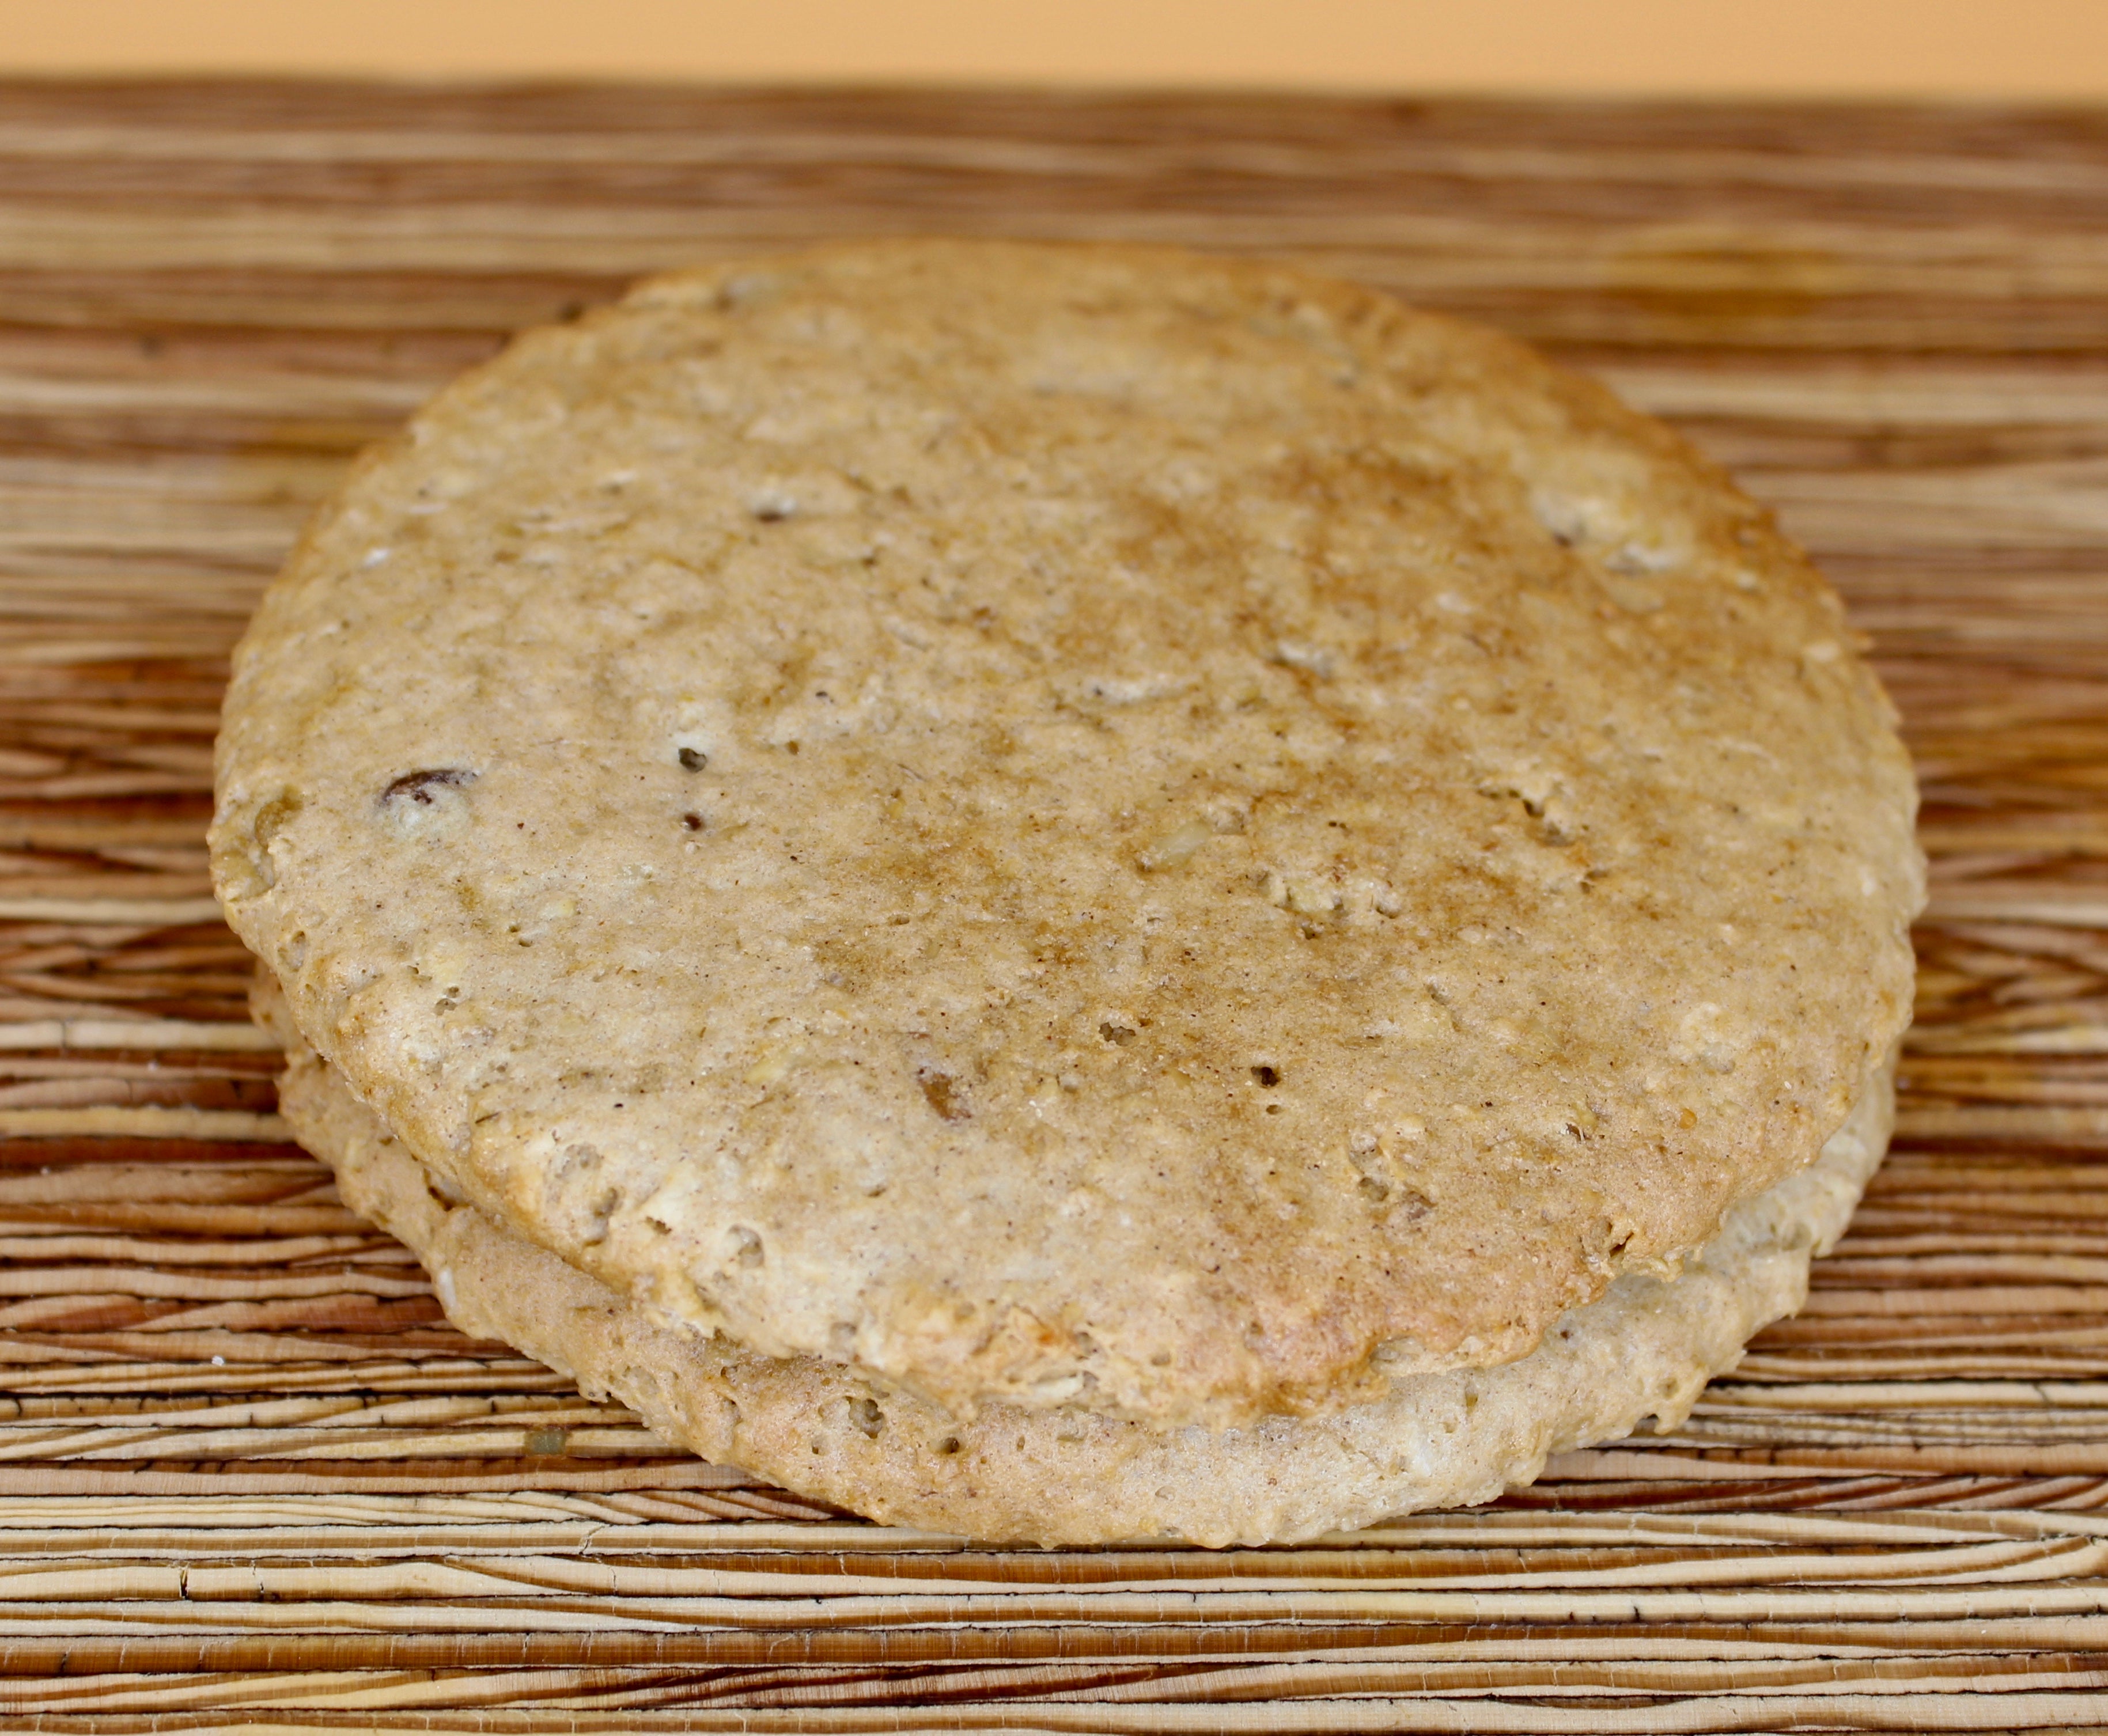 Cowboy Cookie- VARIOUS PACK SIZES (Gluten Free, Vegan)